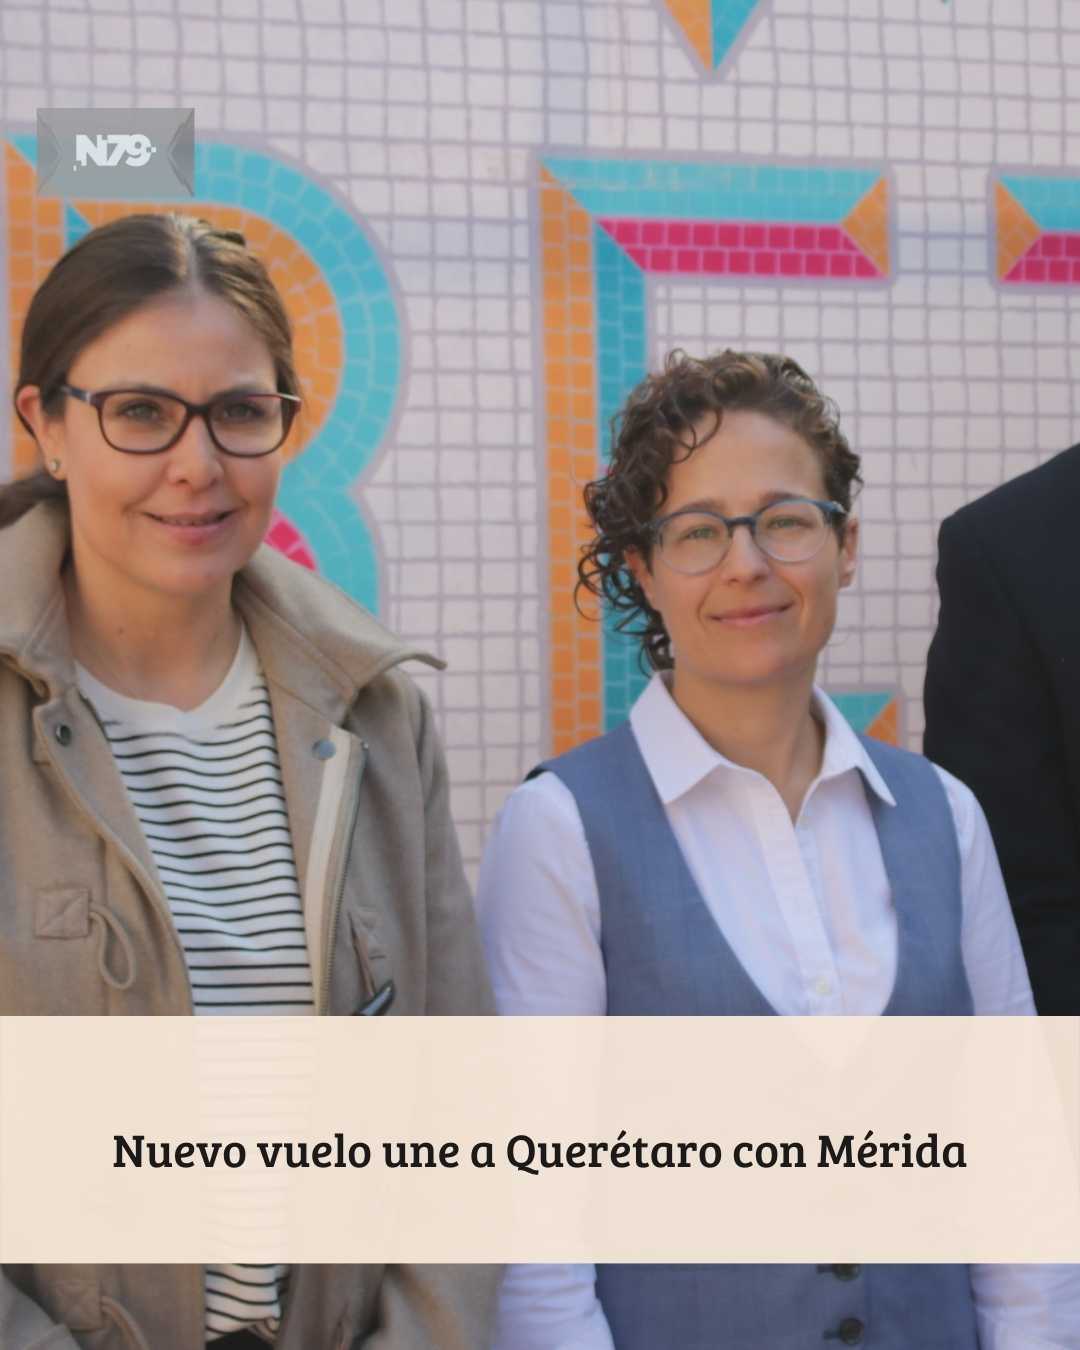 Nuevo vuelo une a Querétaro con Mérida